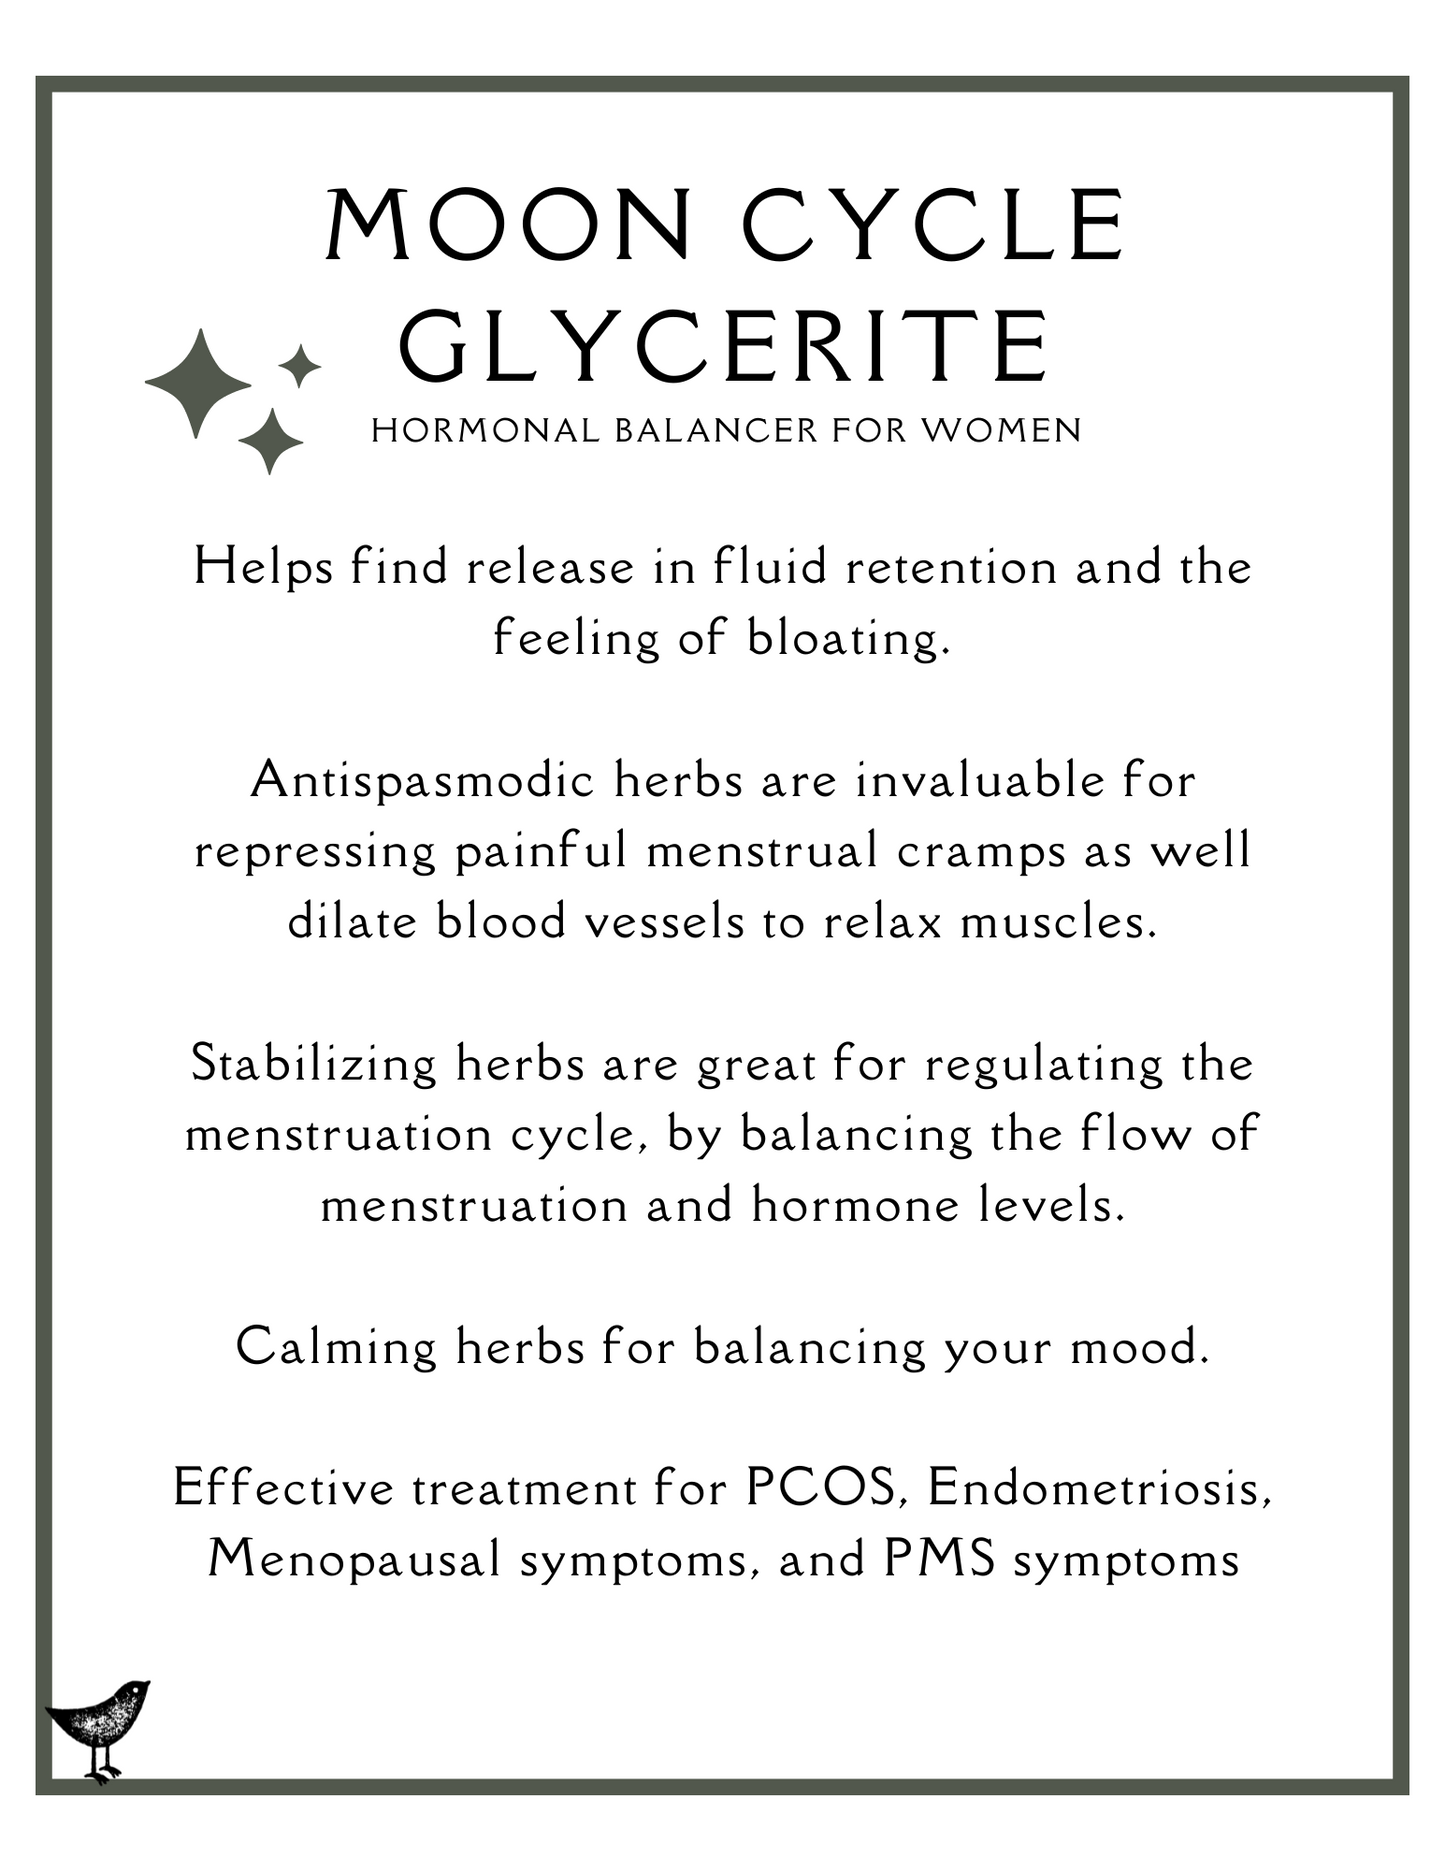 Moon Cycle Glycerite